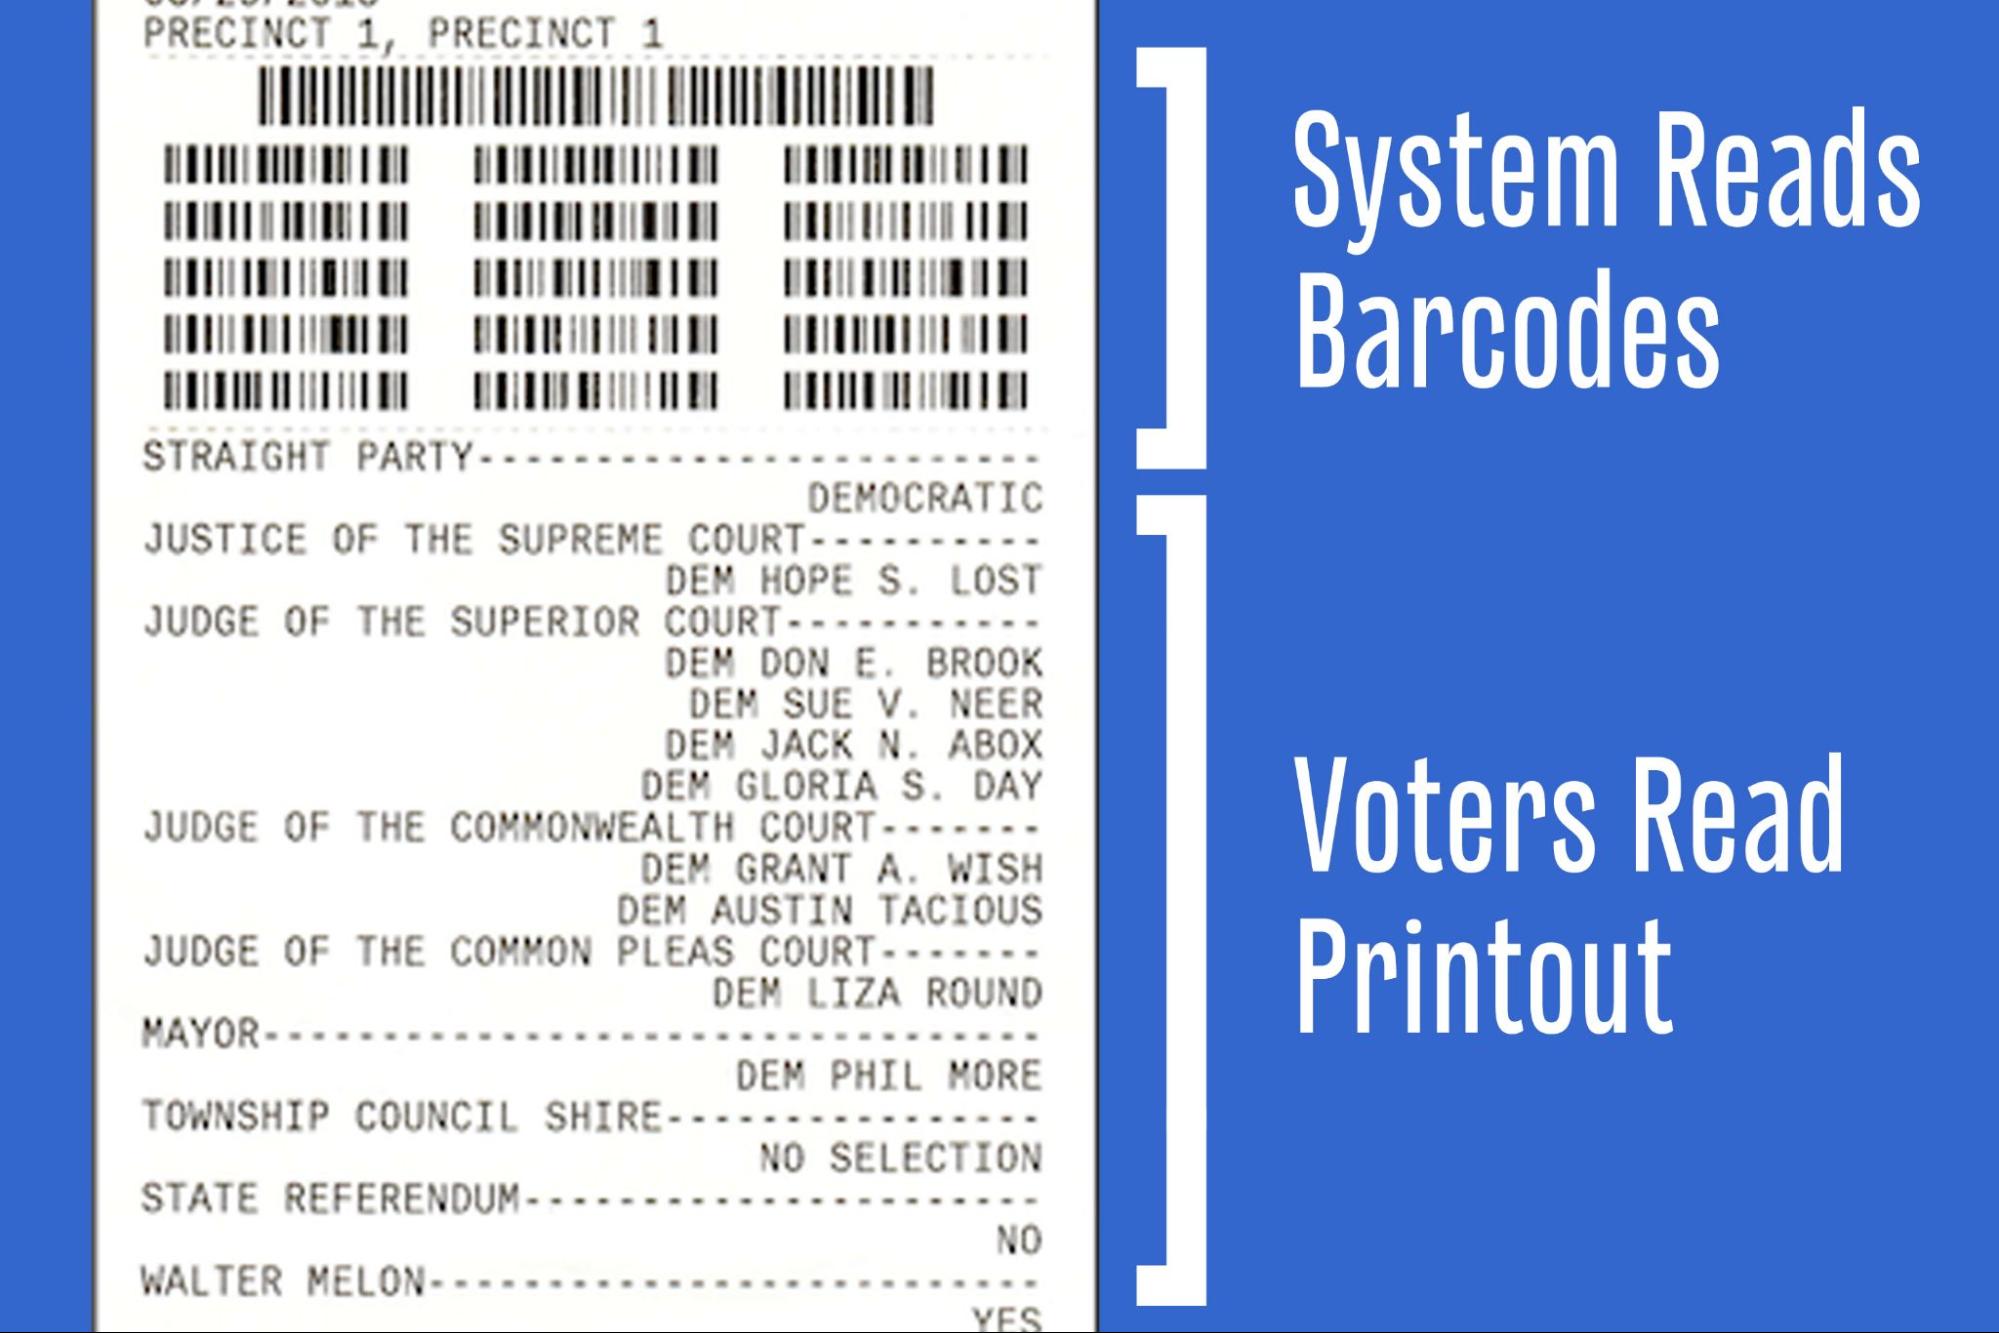 ballot marking device, printed ballot